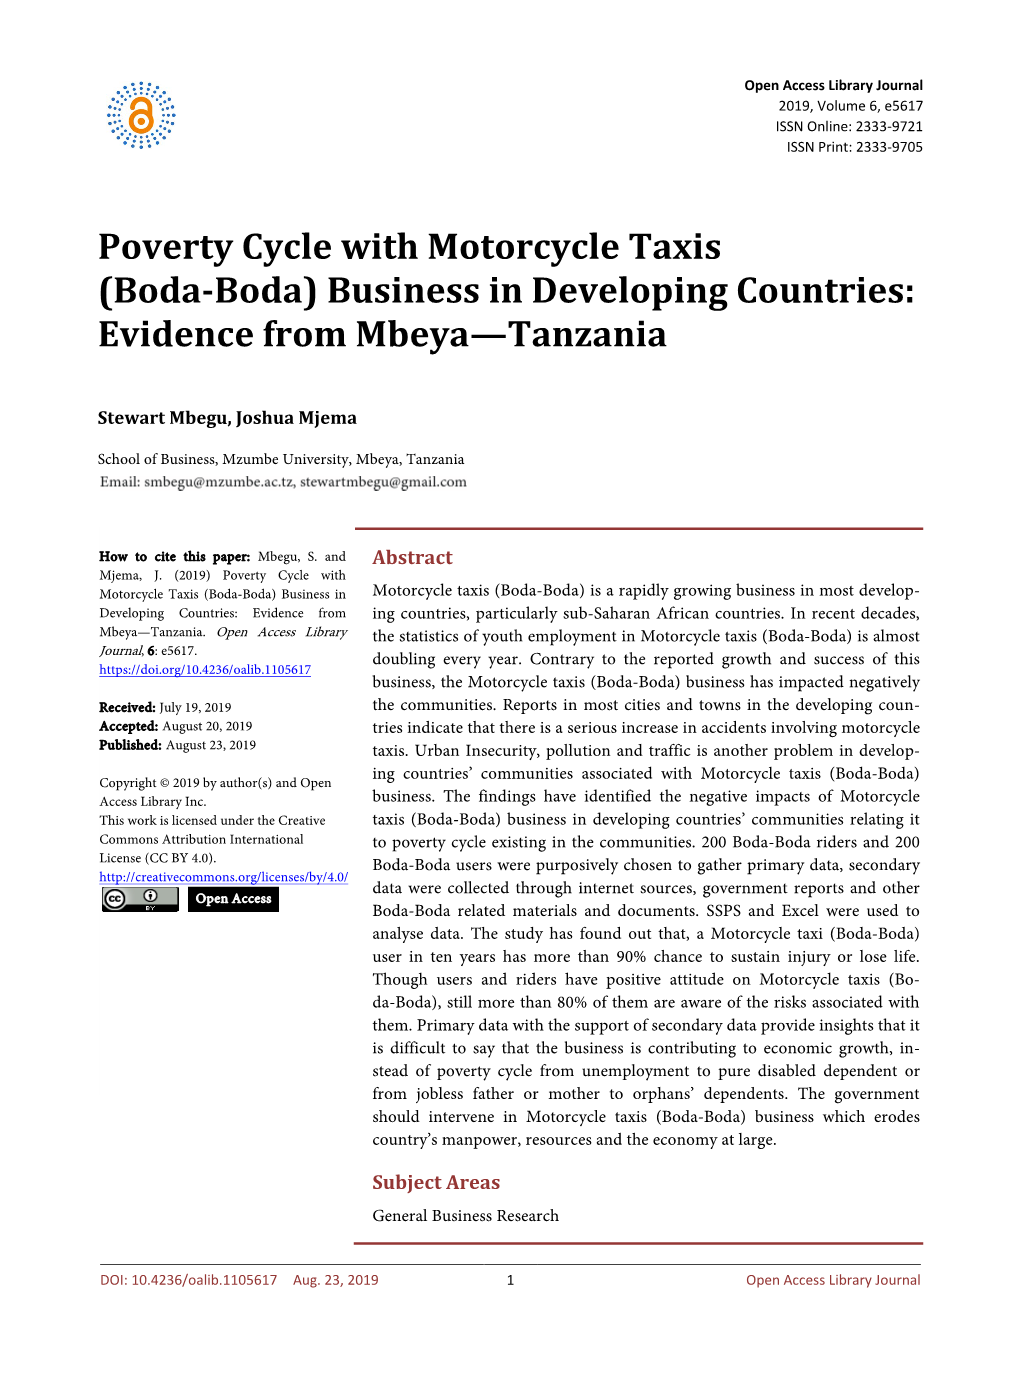 Boda-Boda) Business in Developing Countries: Evidence from Mbeya—Tanzania